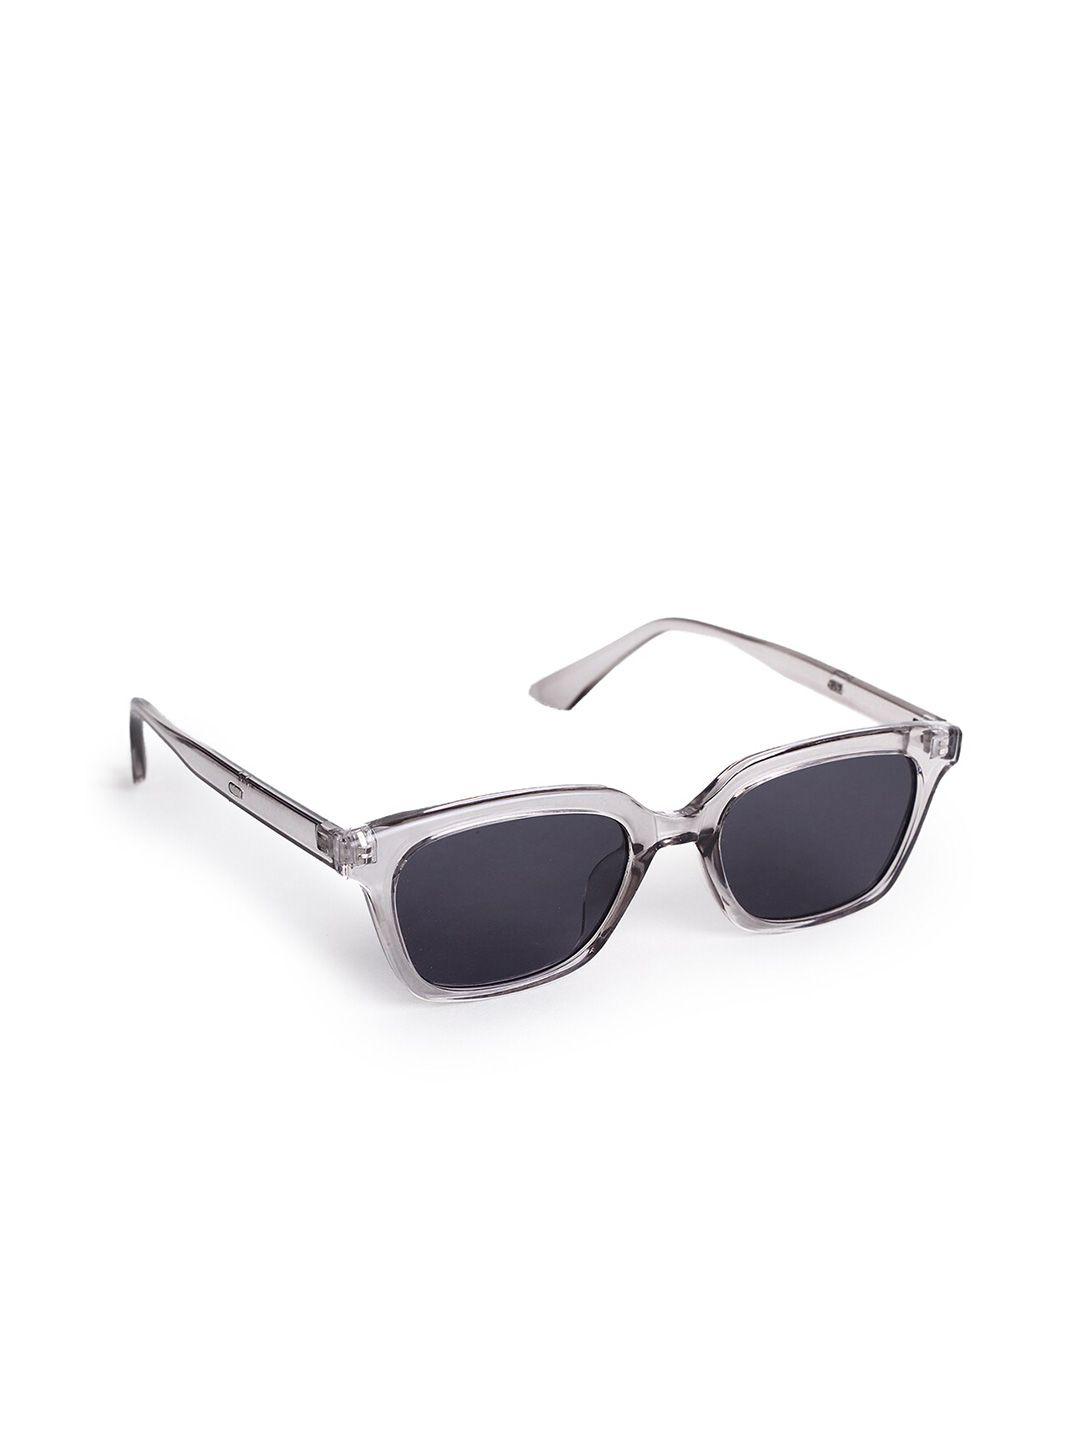 hashburys unisex black lens & gunmetal-toned wayfarer sunglasses with uv protected lens